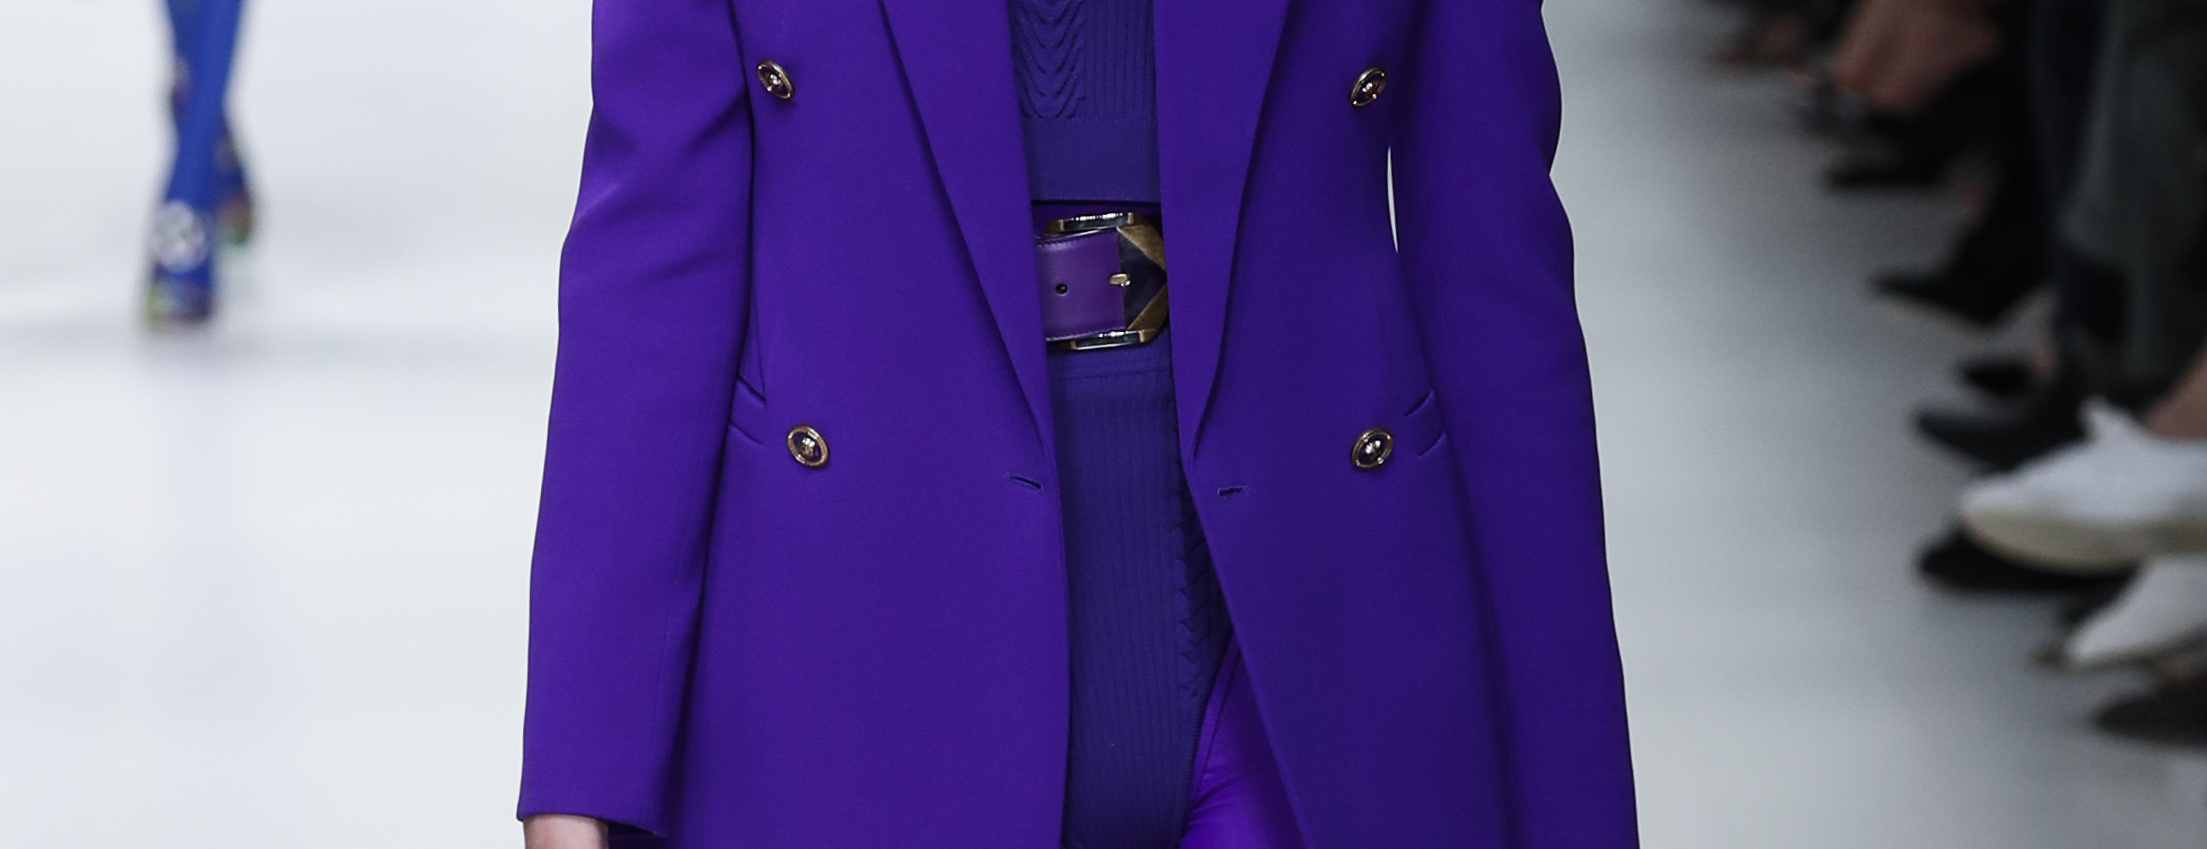 15-fashion-items-inspirados-ultra-violet-destacada